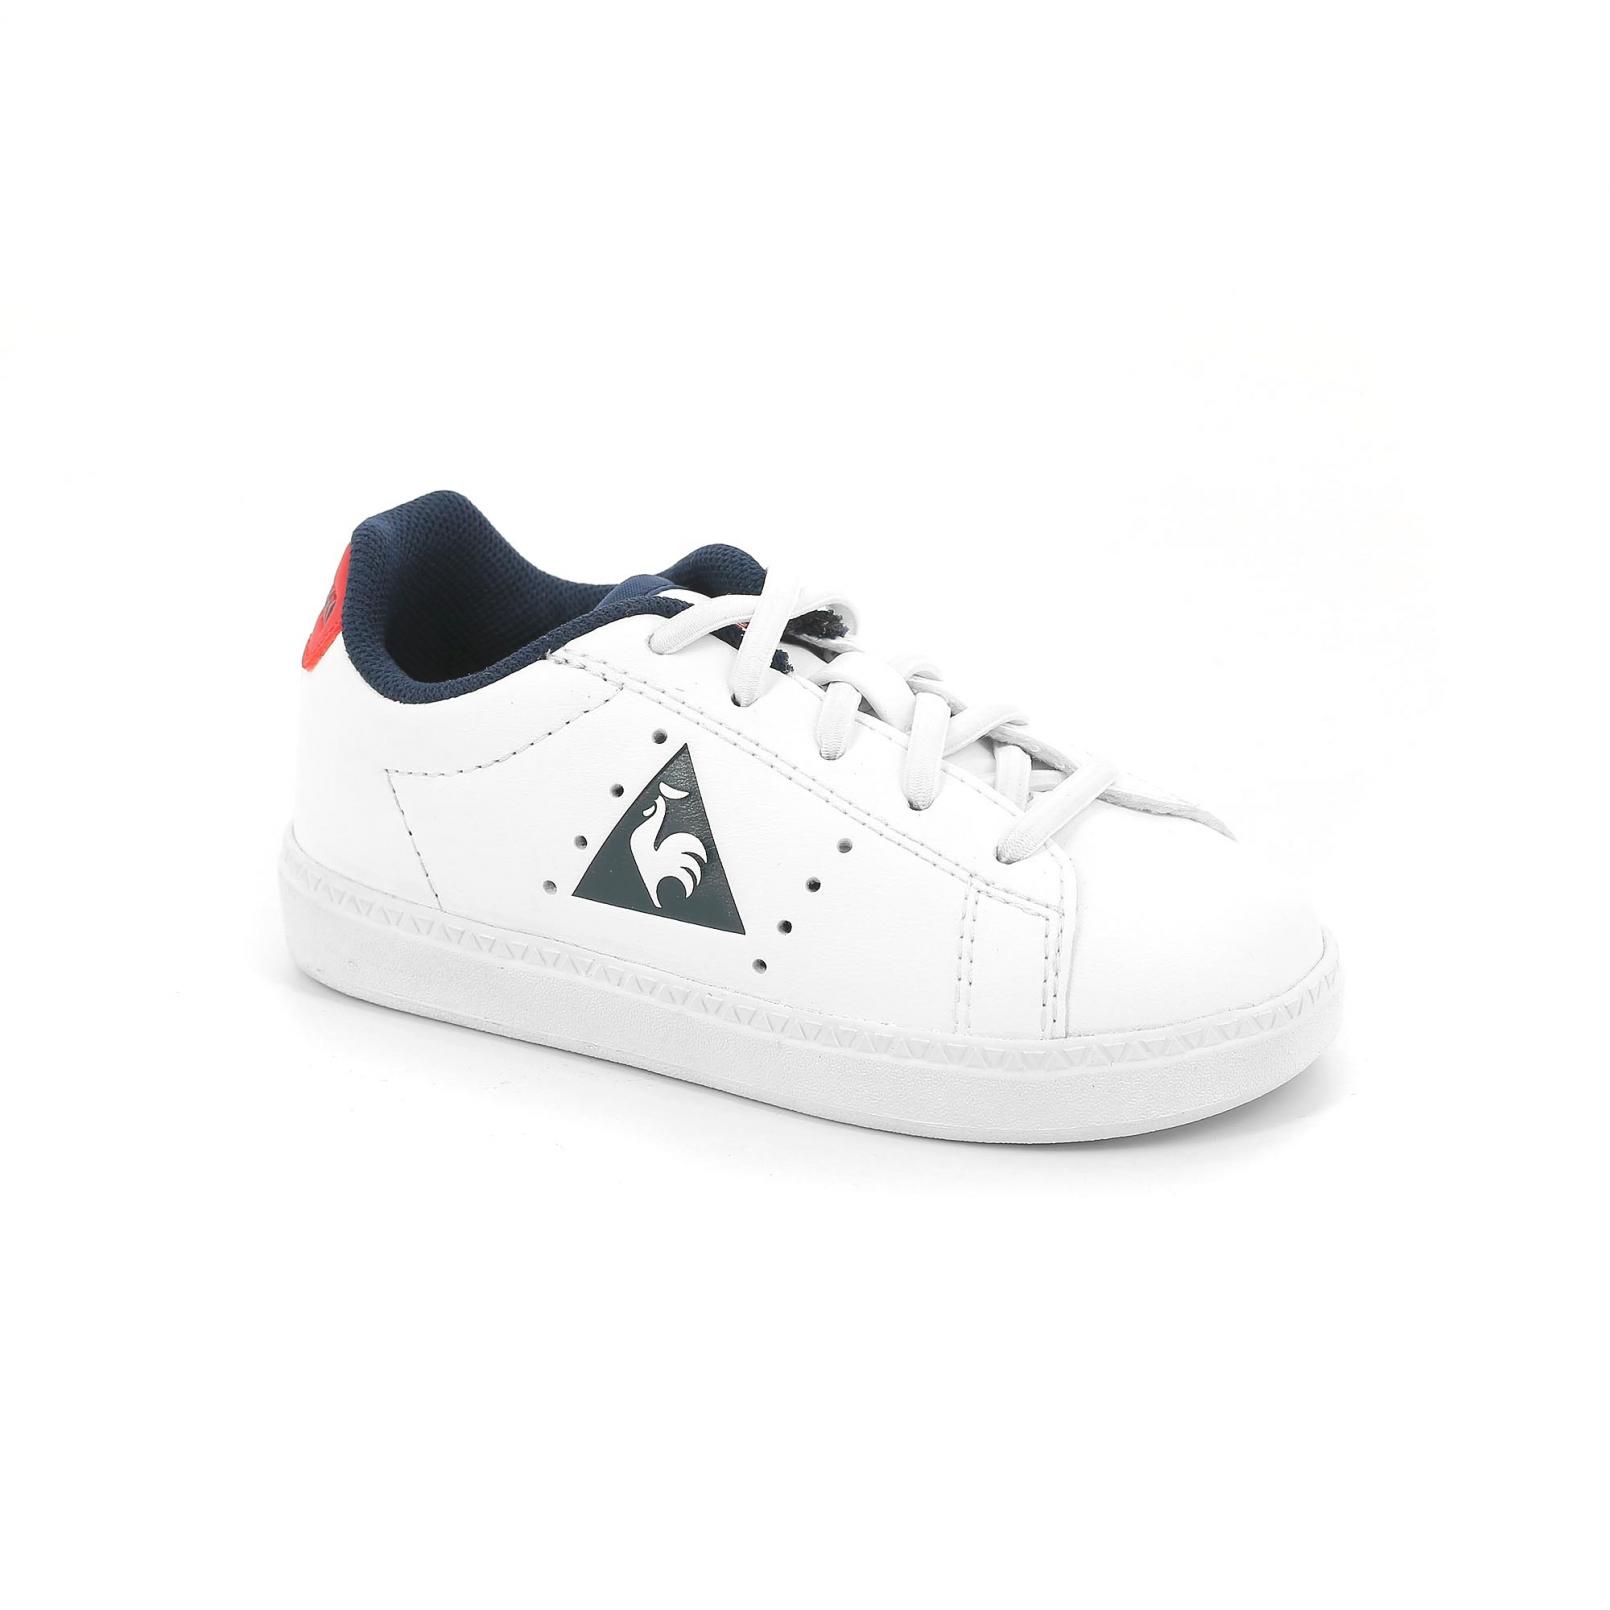 Shoes – Le Coq Sportif Courtone Inf S Lea White/Red